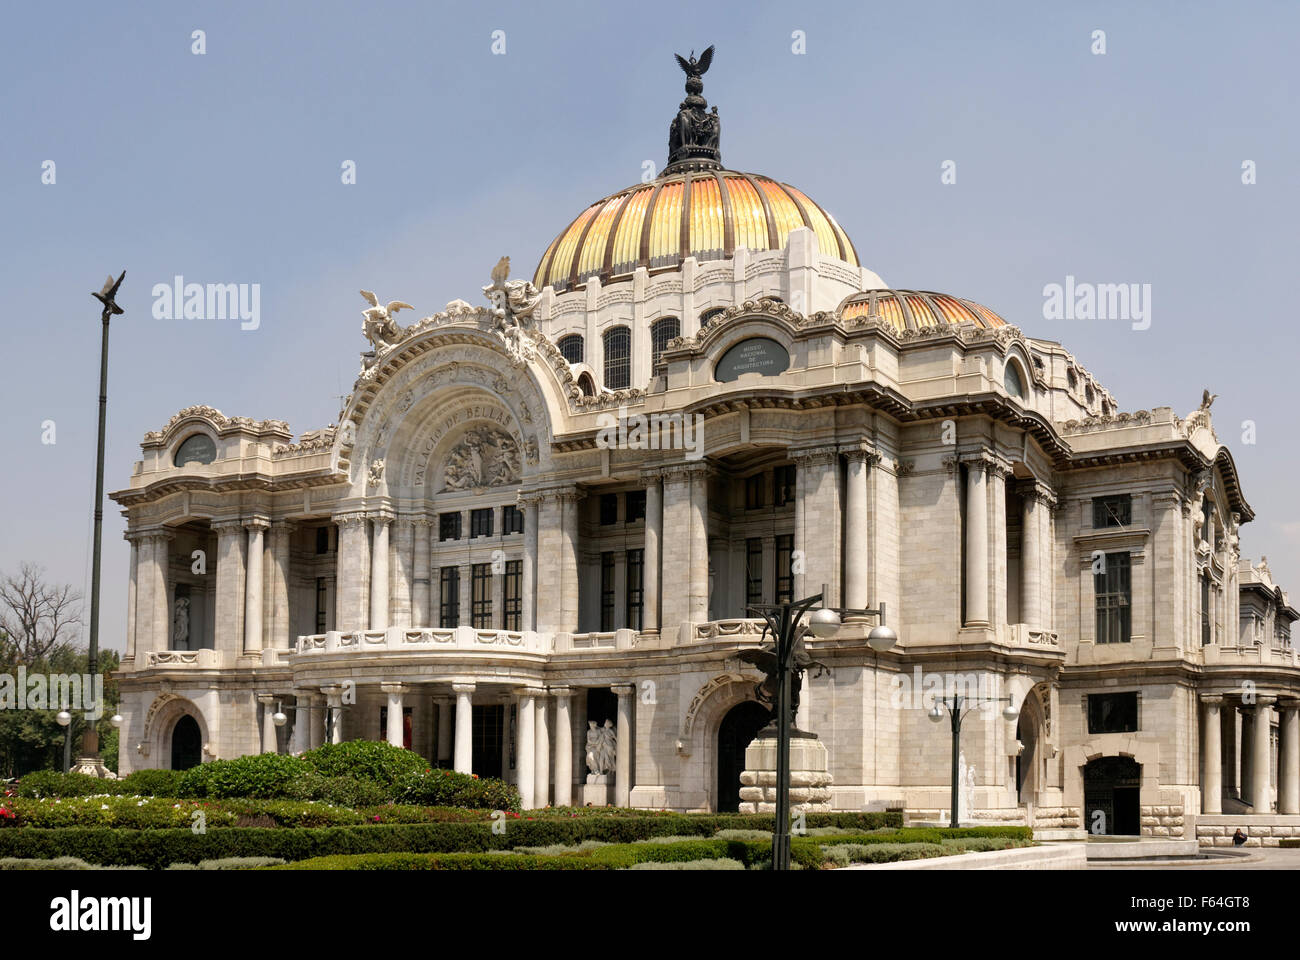 The Art Nouveau and Art Deco Palacio de Bellas Artes or Palace of Fine Arts in Mexico City, Mexico Stock Photo